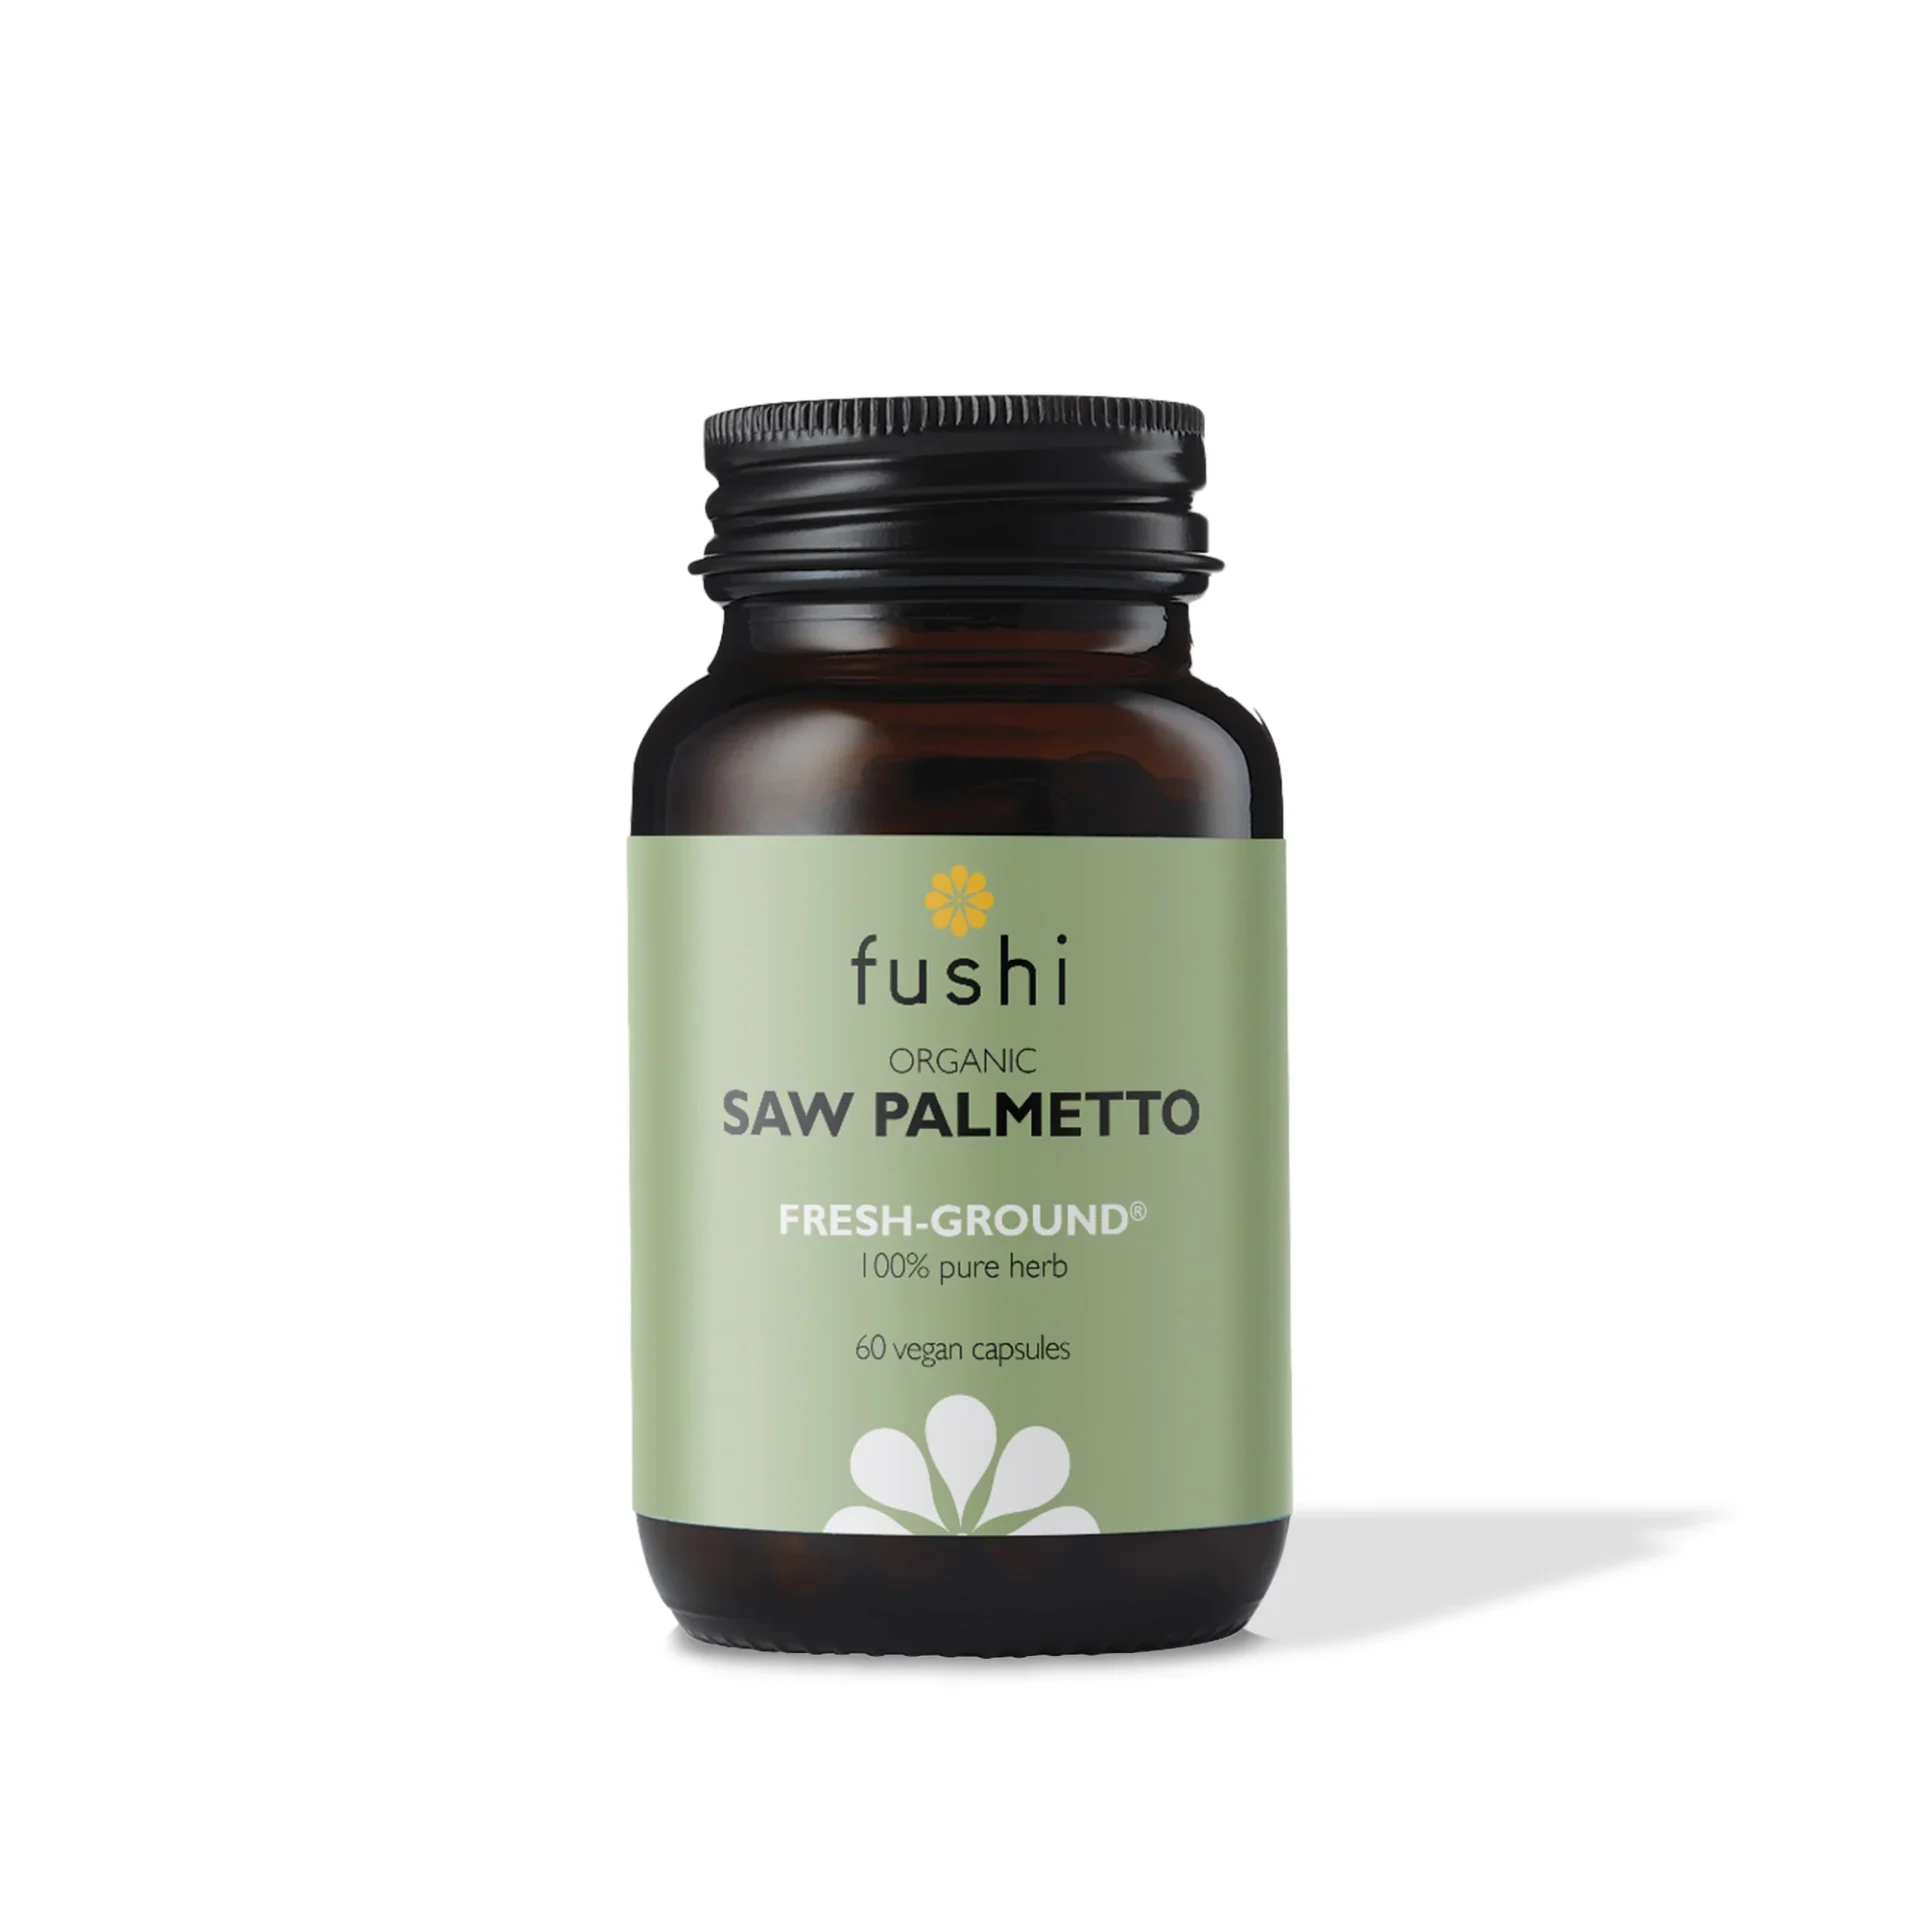 Fushi Organic Saw Palmetto 60 Capsules